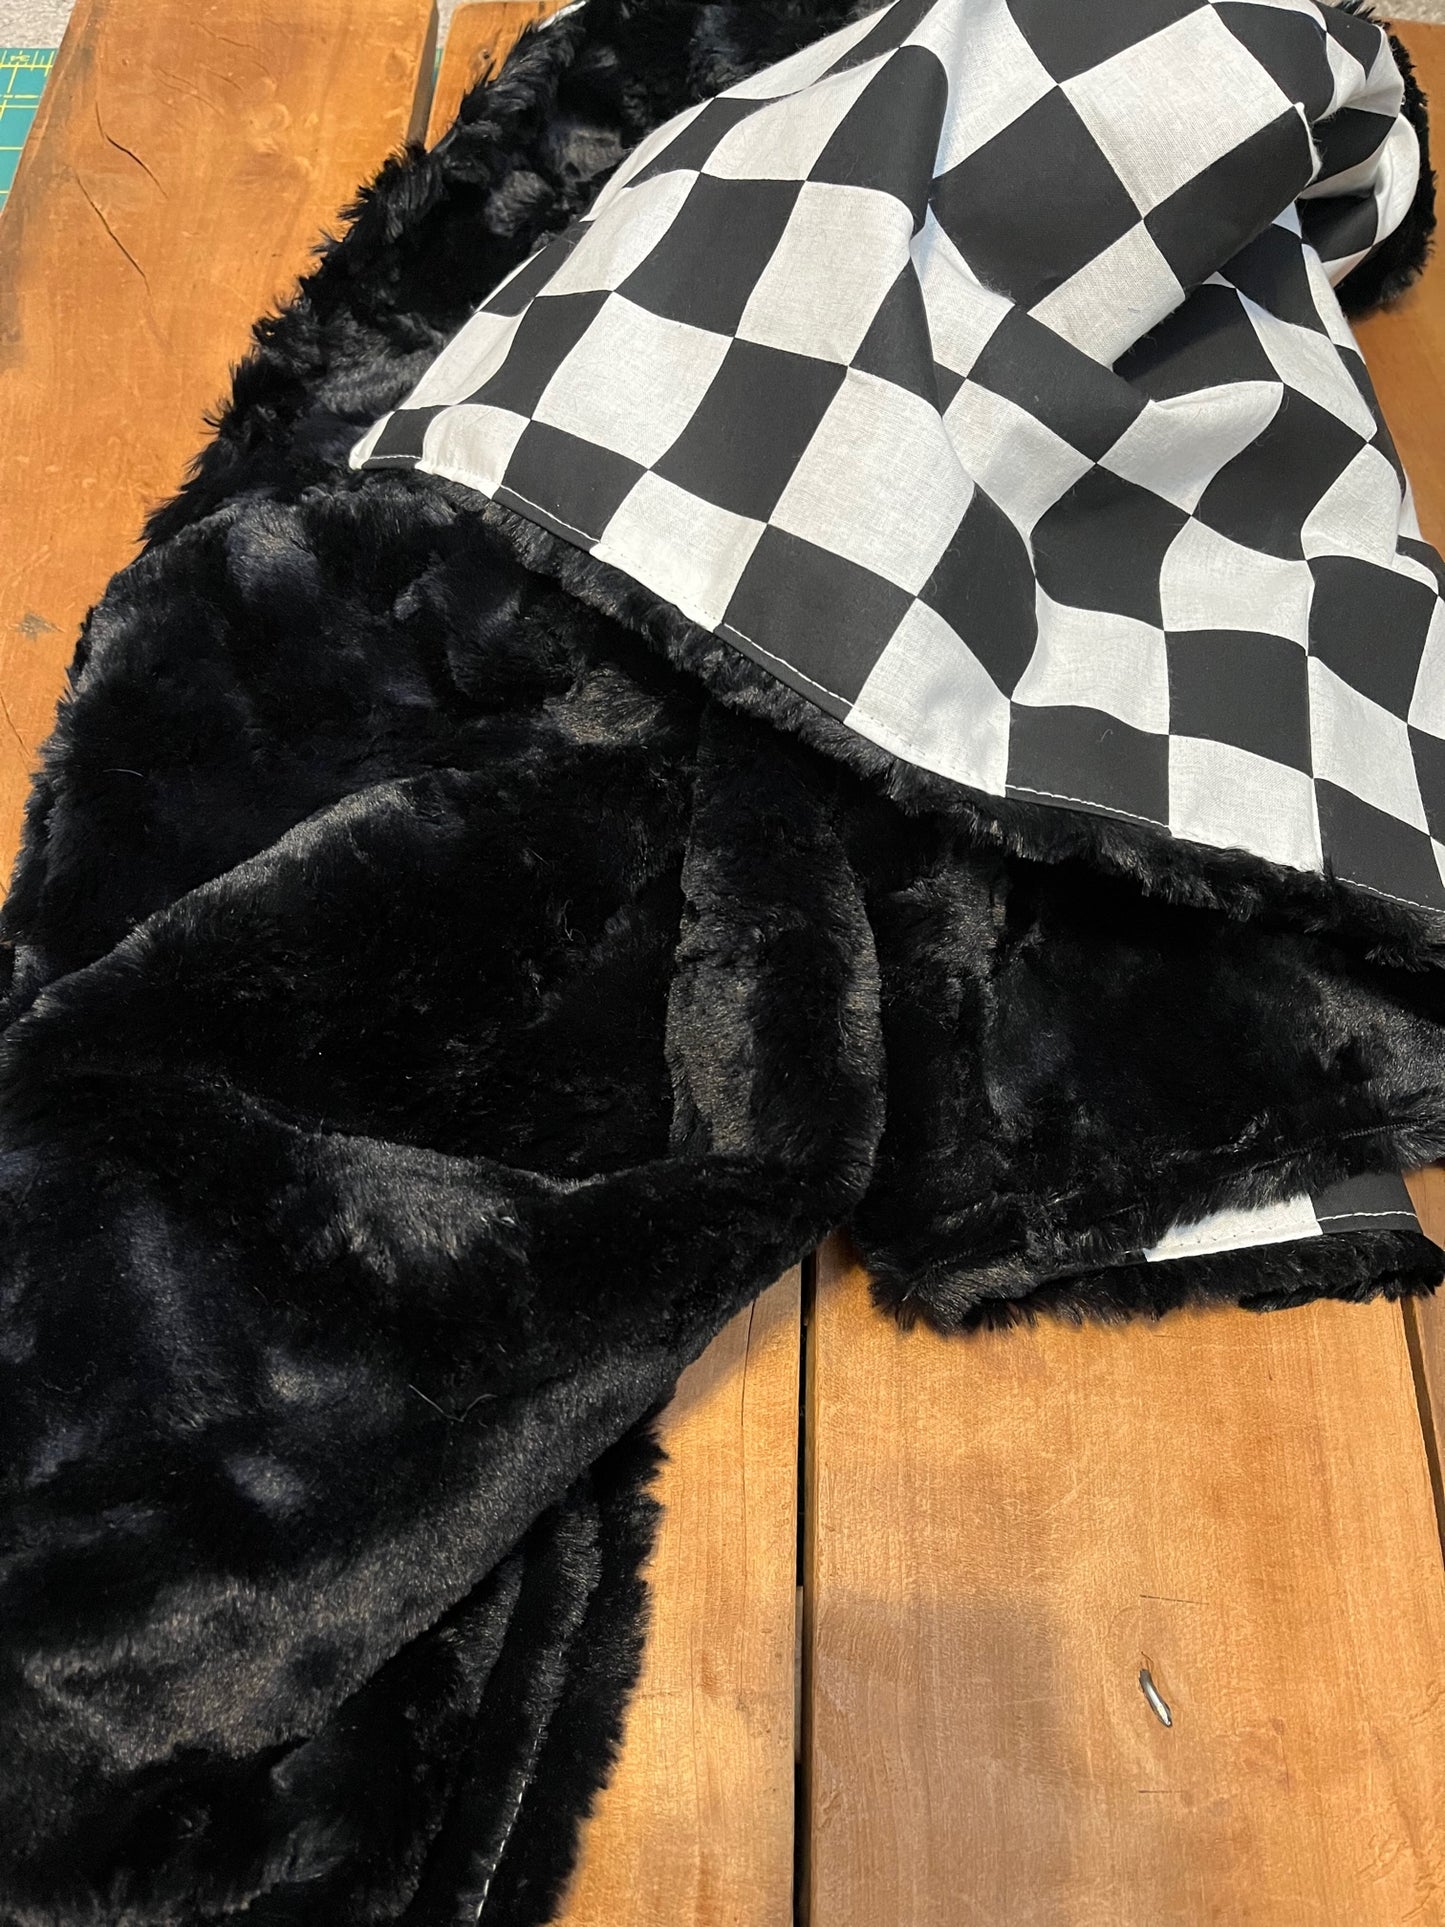 Black and White Checkered Blanket